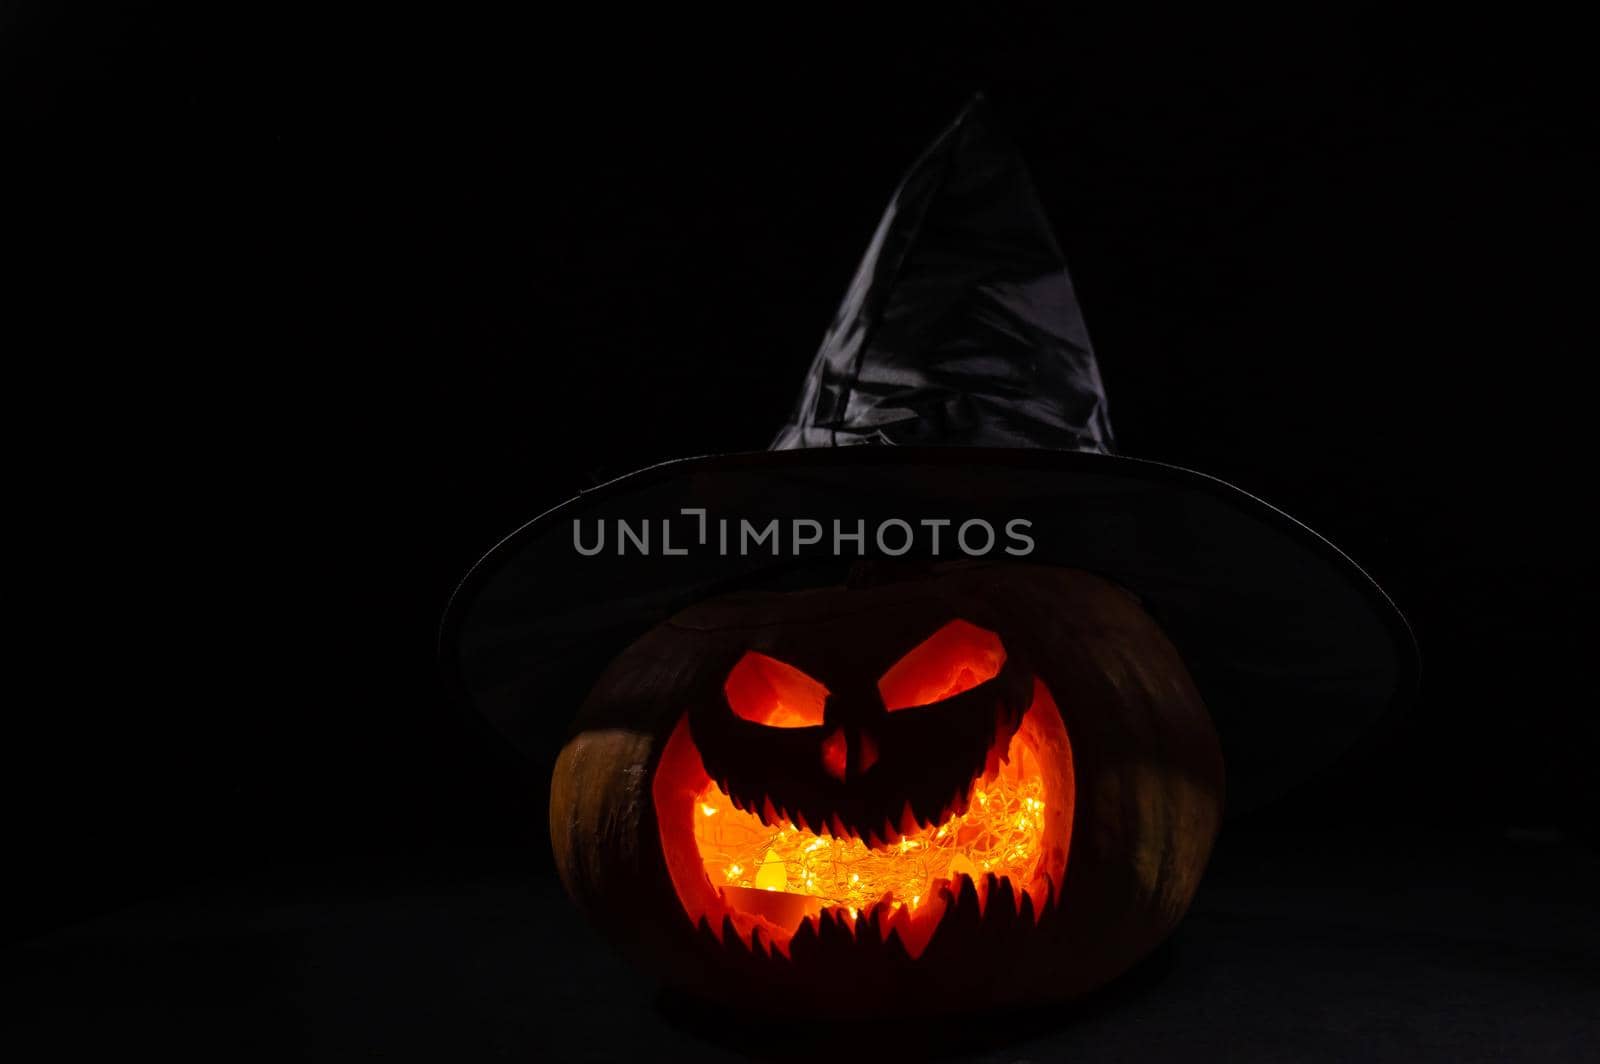 Glowing pumpkin in a witch hat in the dark. Jack o lantern